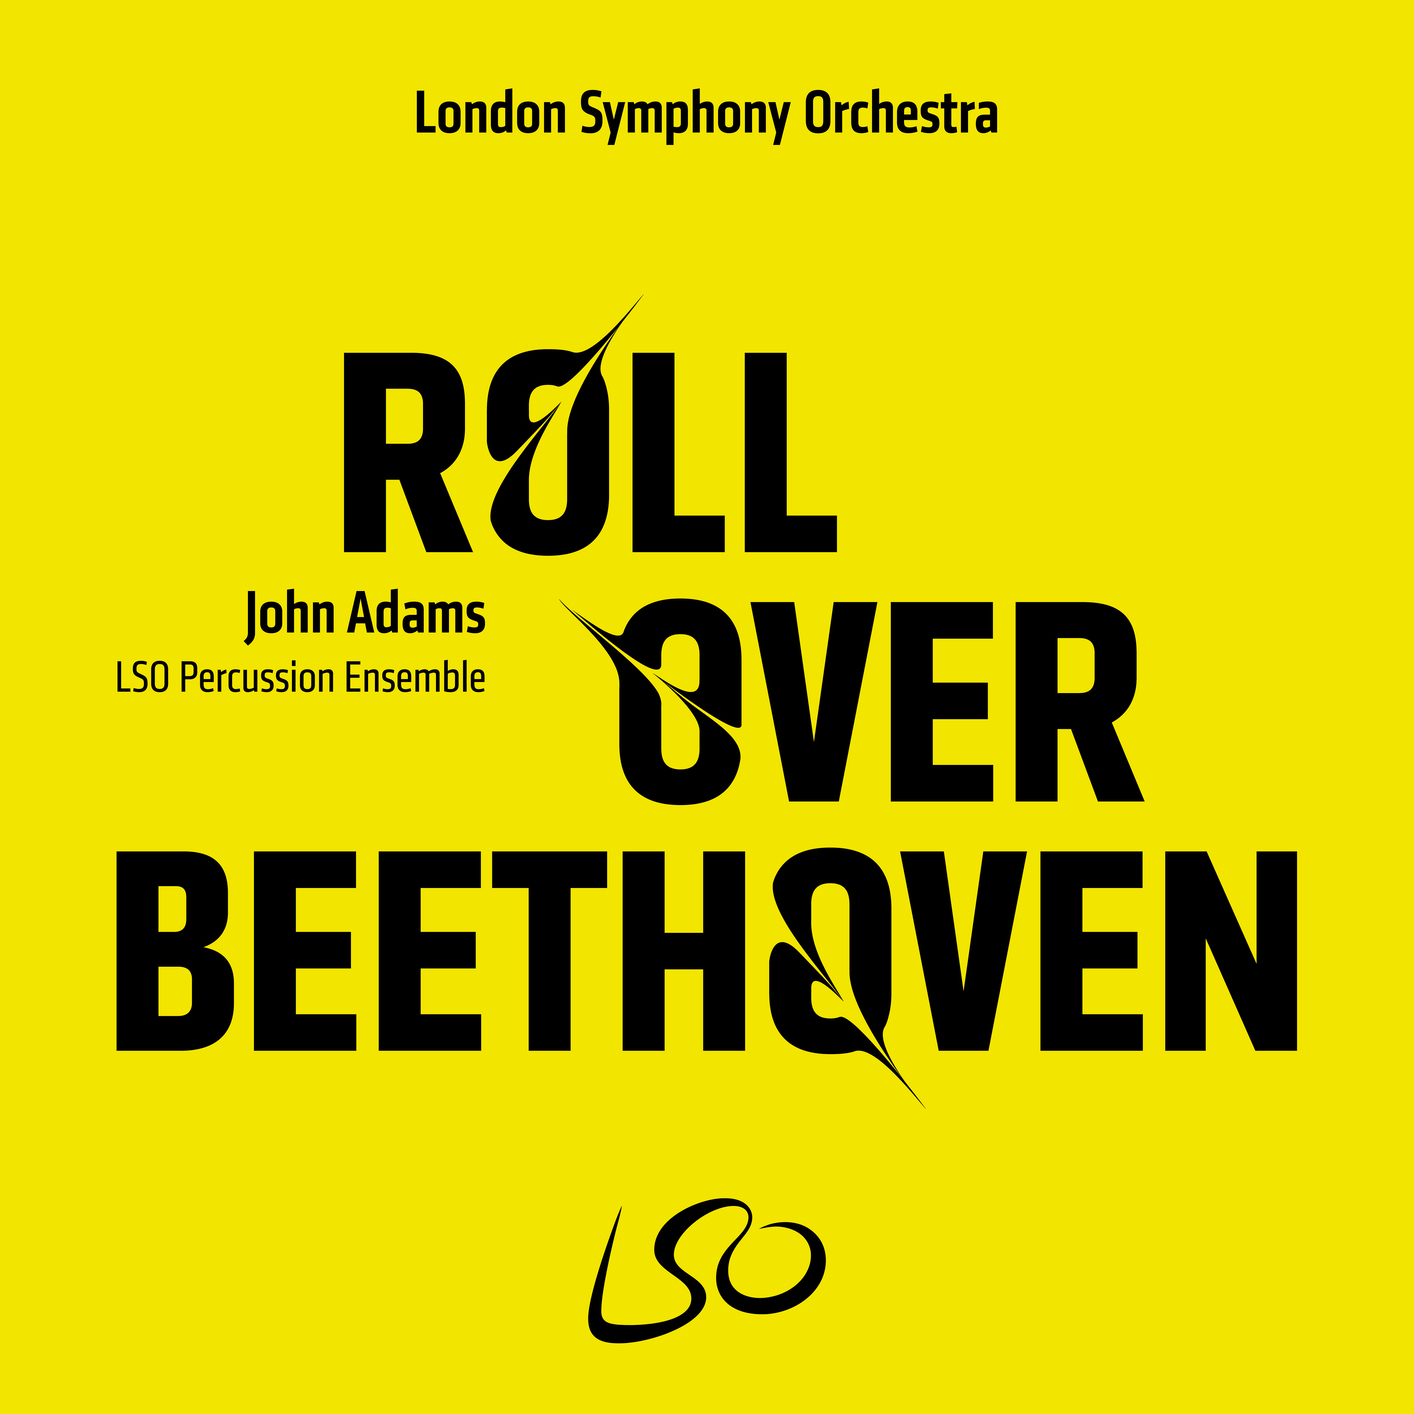 LSO Percussion Ensemble, Joseph Havlat & Philip Moore - John Adams: Roll Over Beethoven (2019) [FLAC 24bit/96kHz]